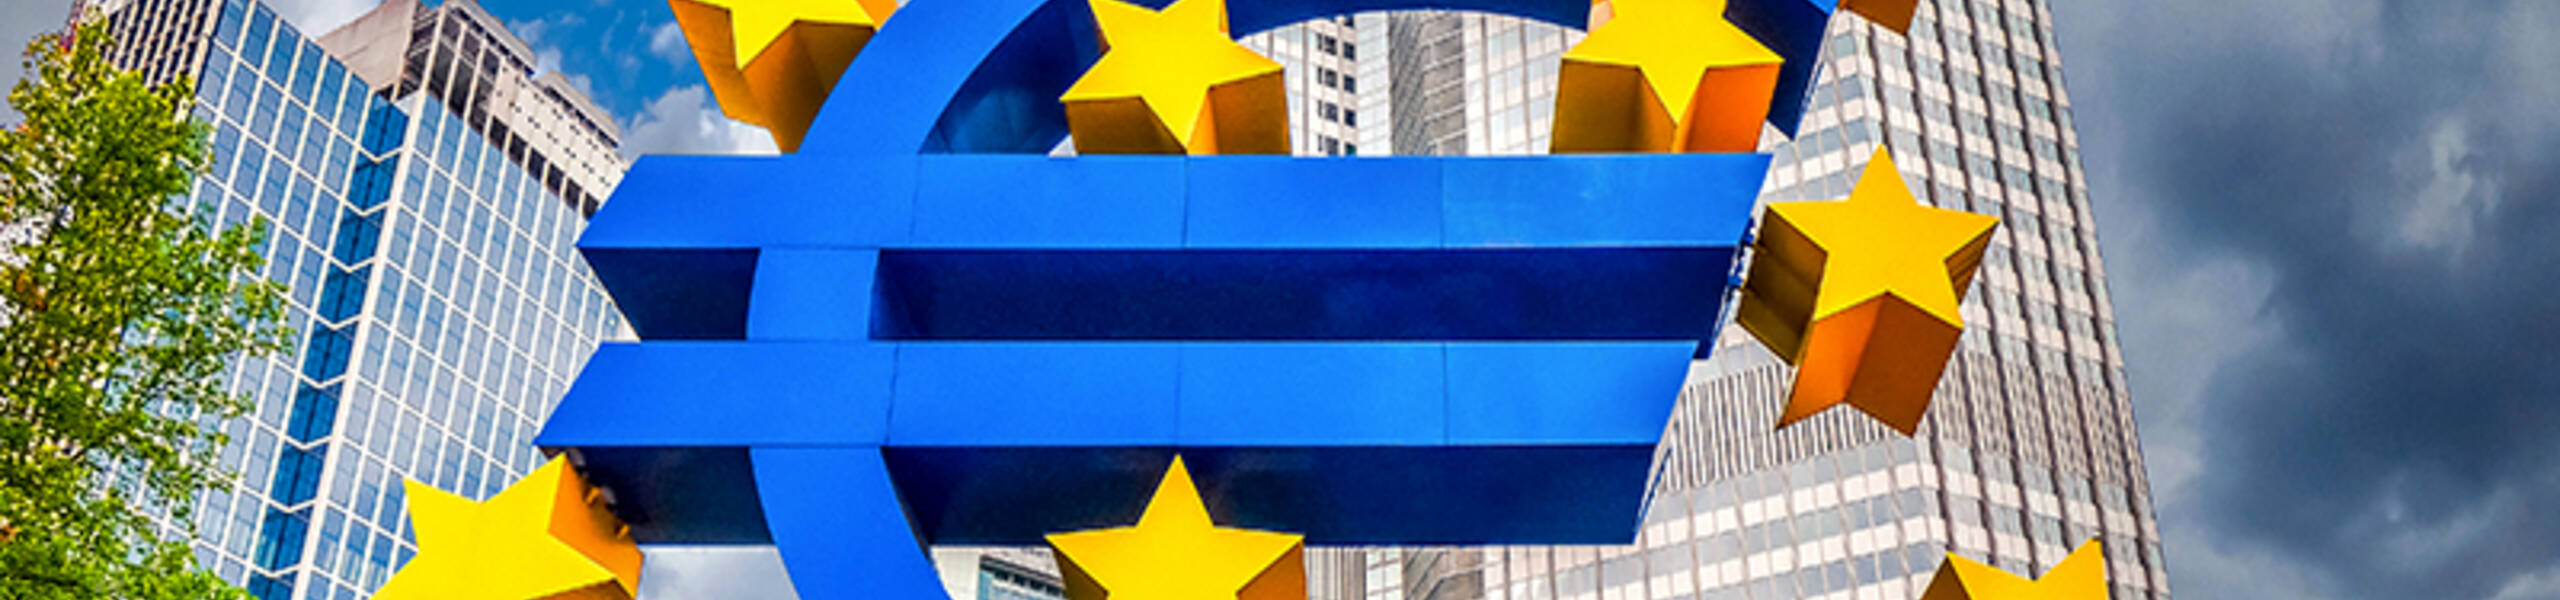 تحليل زوج اليورو دولار ليوم 1-5-2020